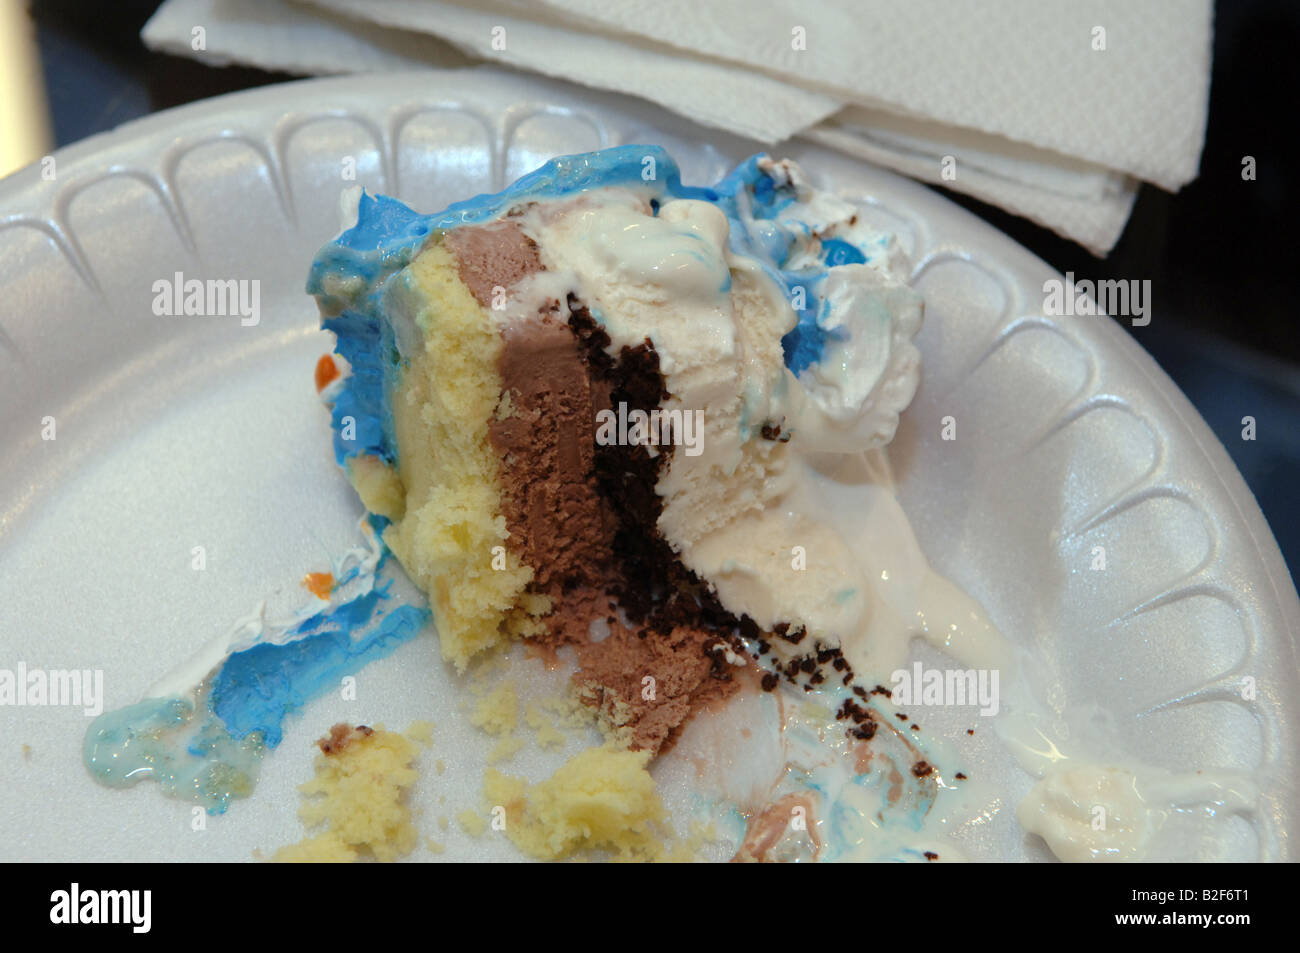 Half eaten slice of ice cream cake Stock Photo